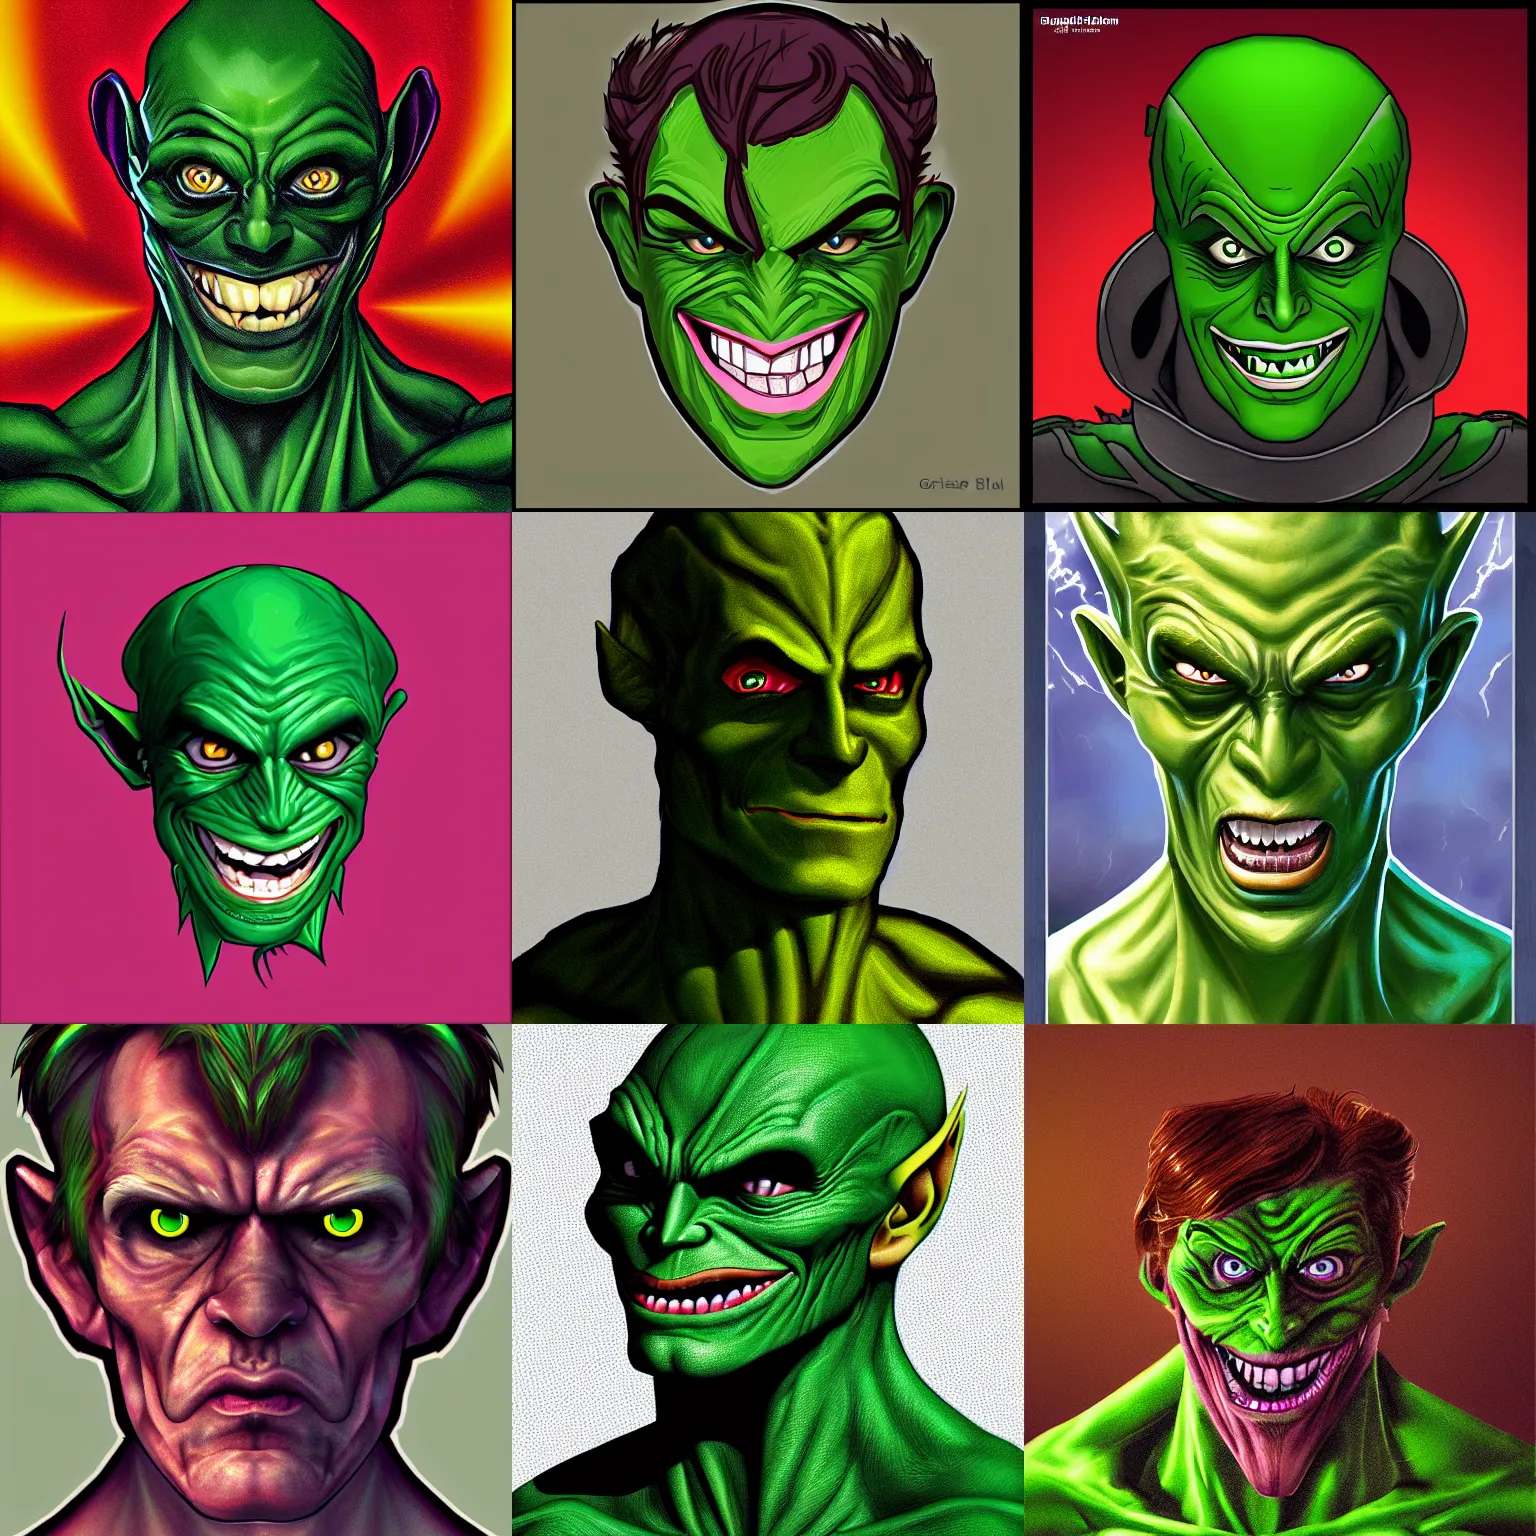 Prompt: green goblin portrait, icon, digital art